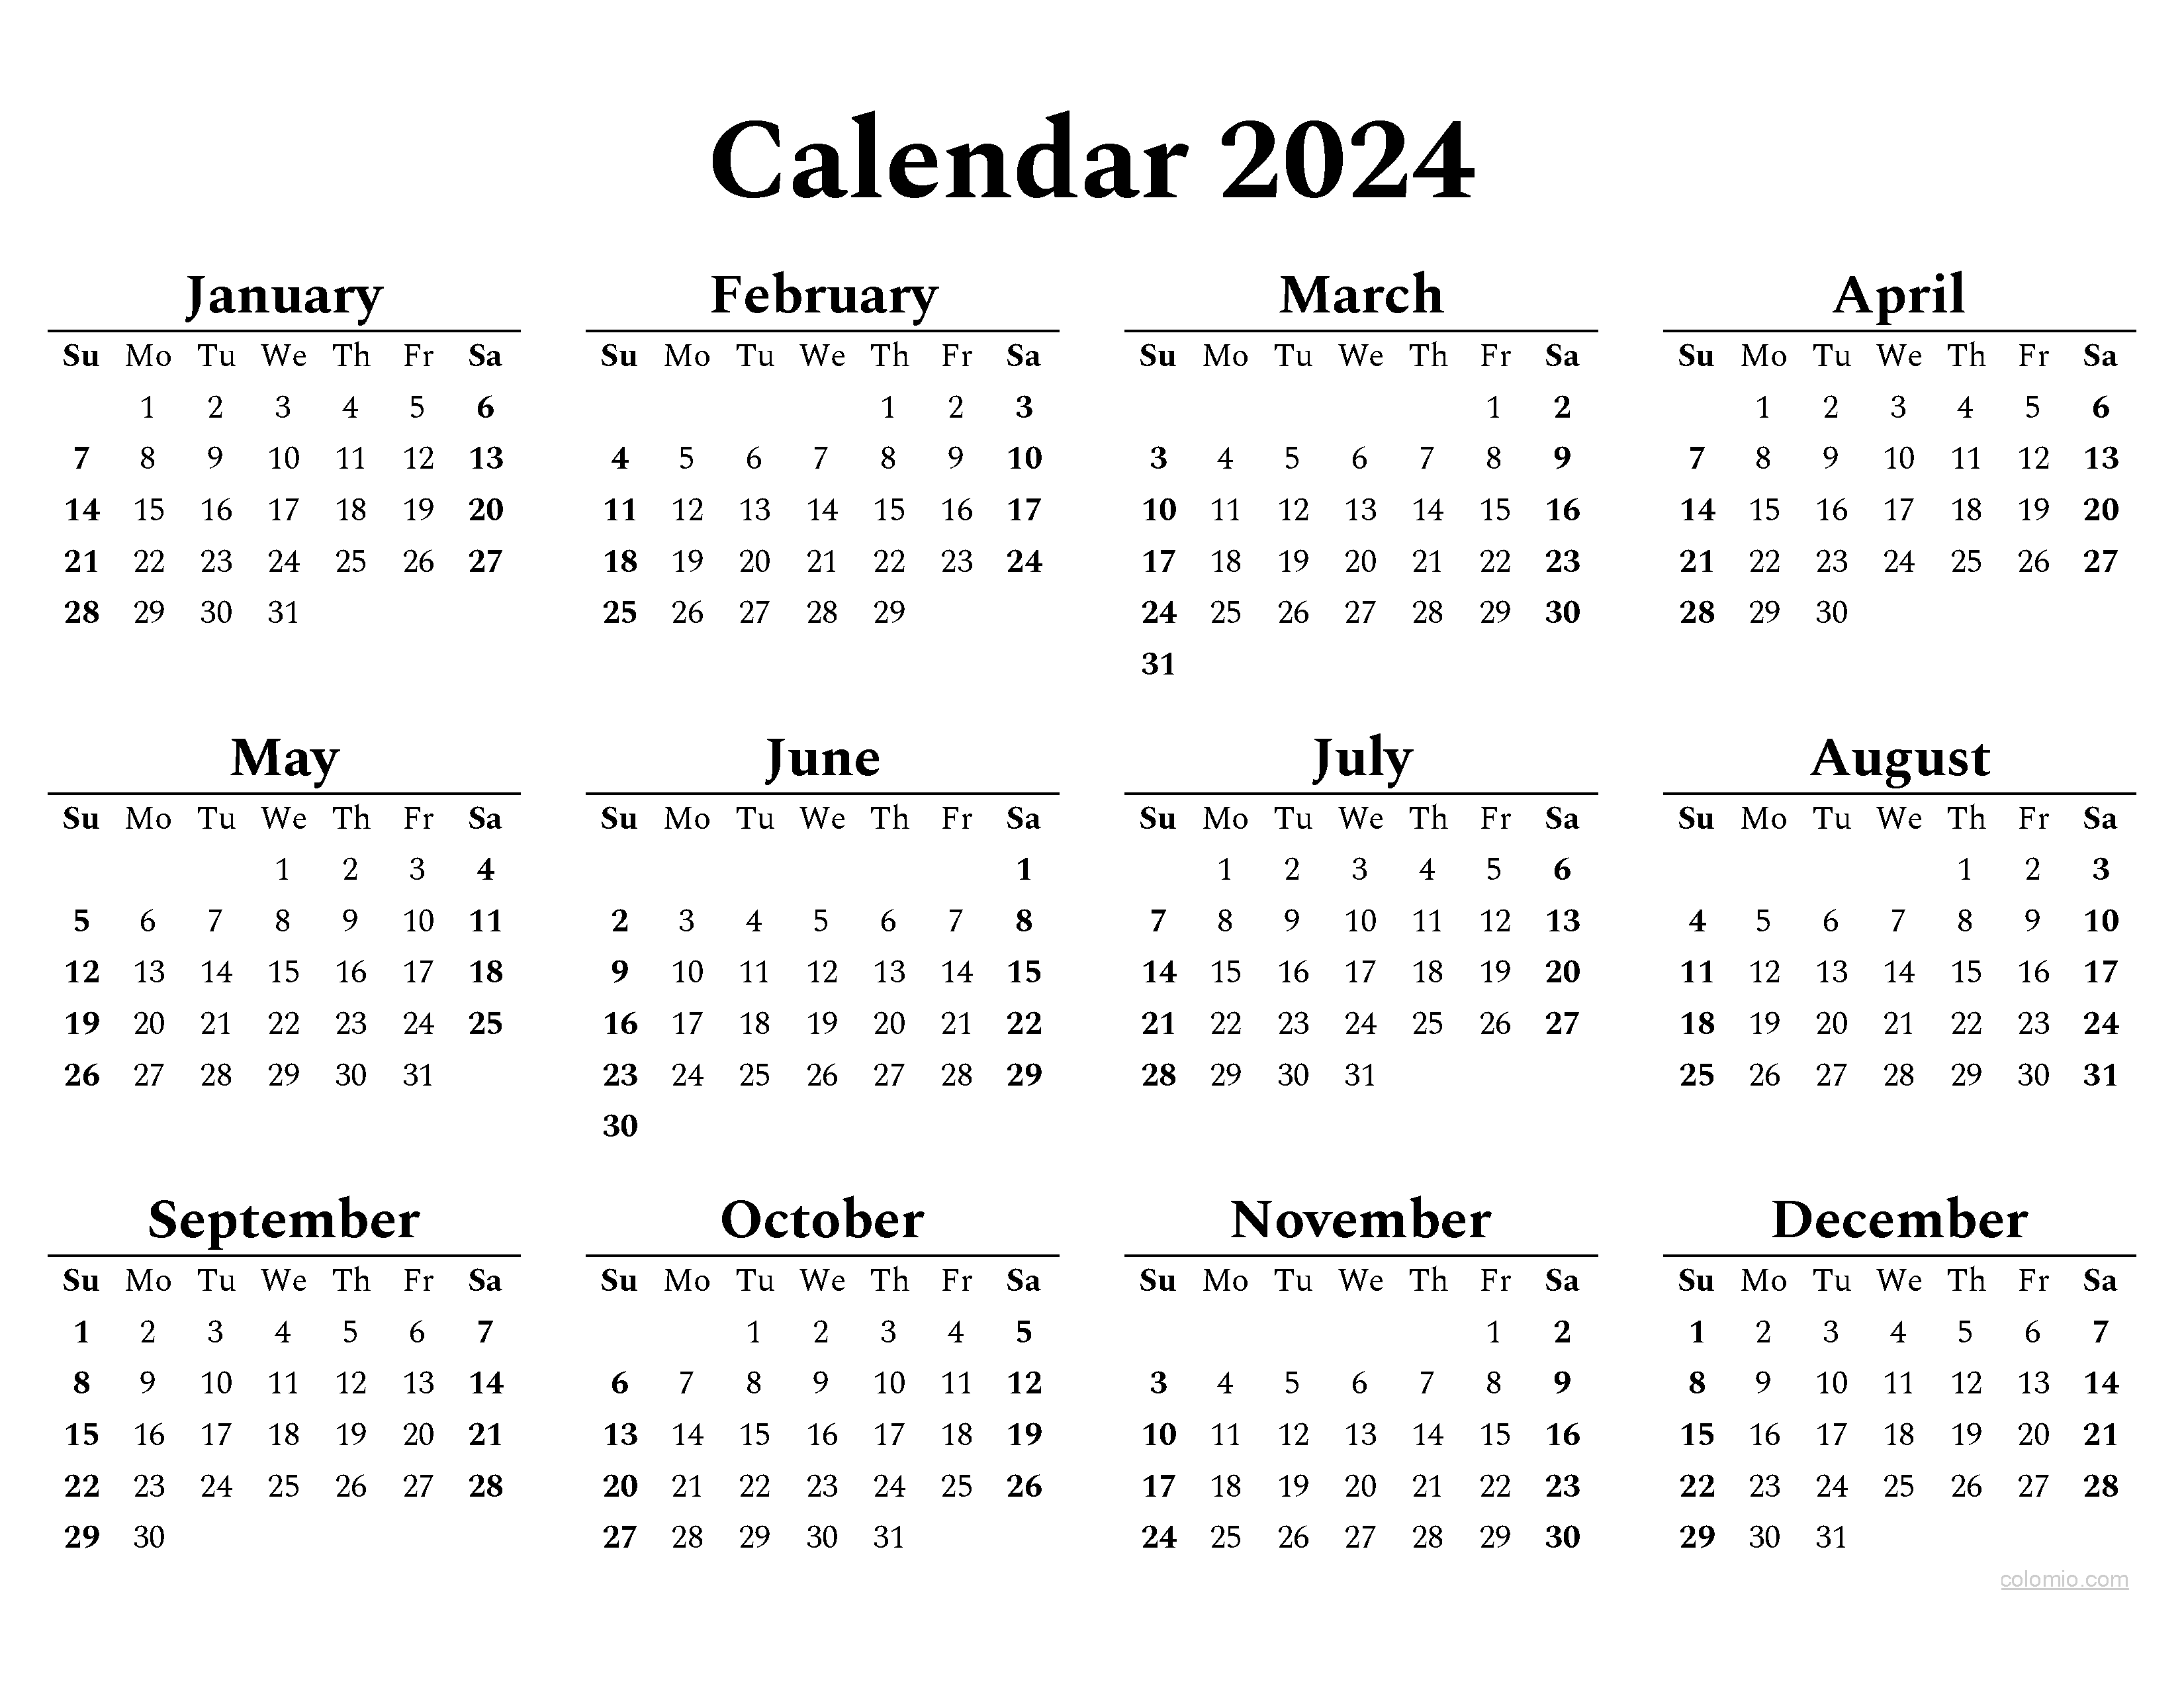 Calendar 2024 Template Pdf Fina Orelle - Free Printable 1 2 Page Calendar 2024